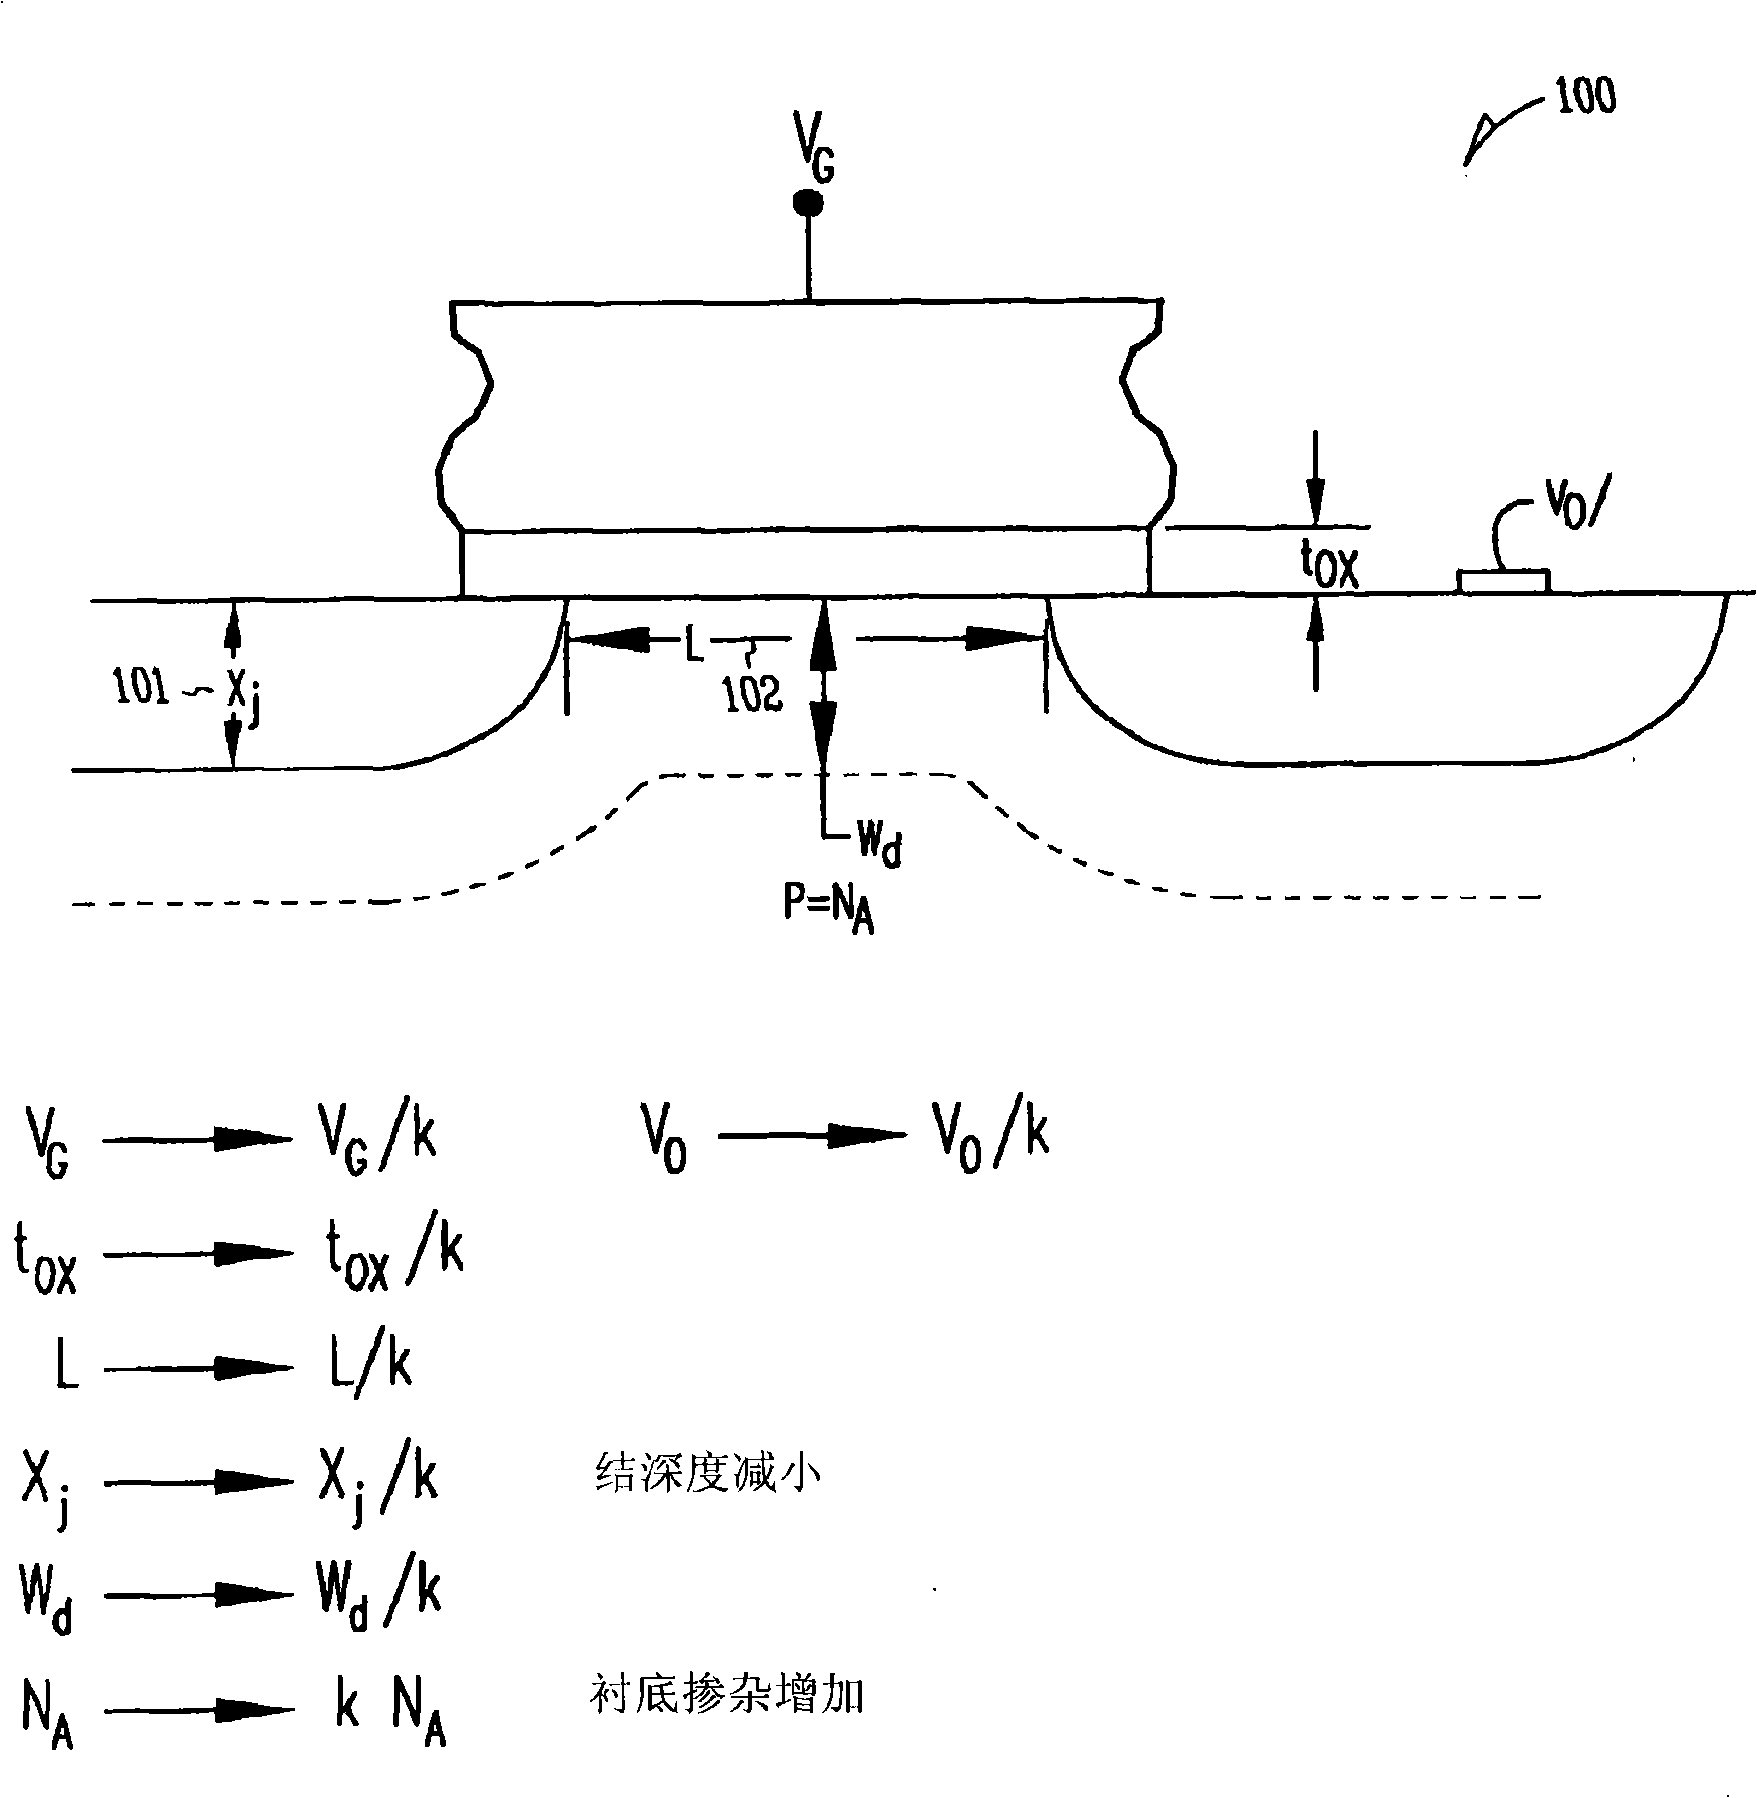 Nanowire transistor with surrounding gate